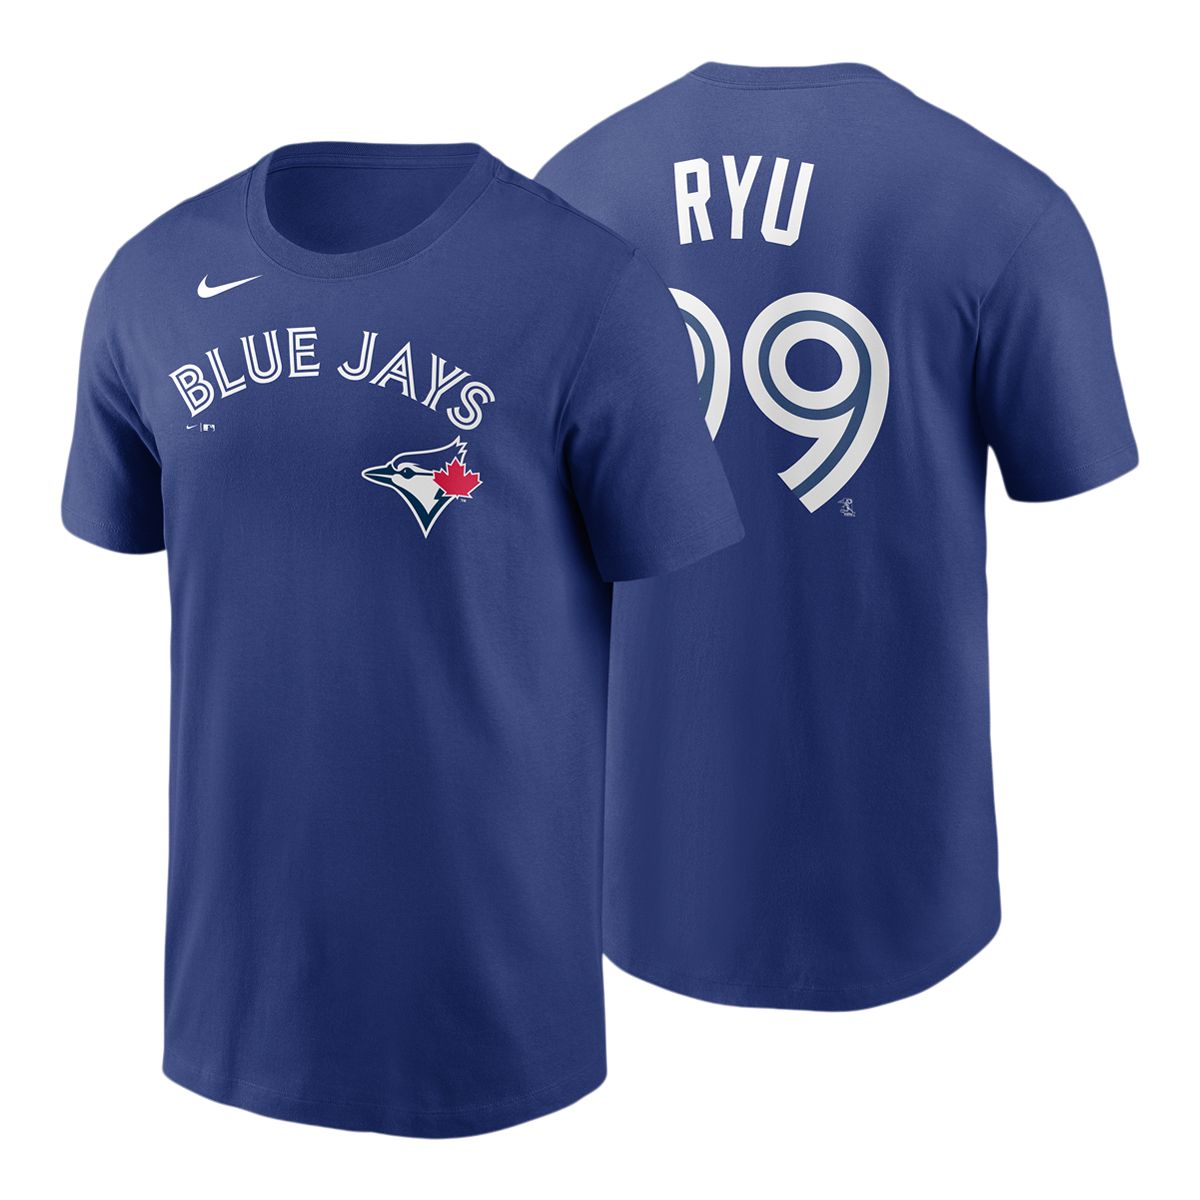 NIKE Toronto Blue Jays Nike Hyun-jin Ryu T Shirt